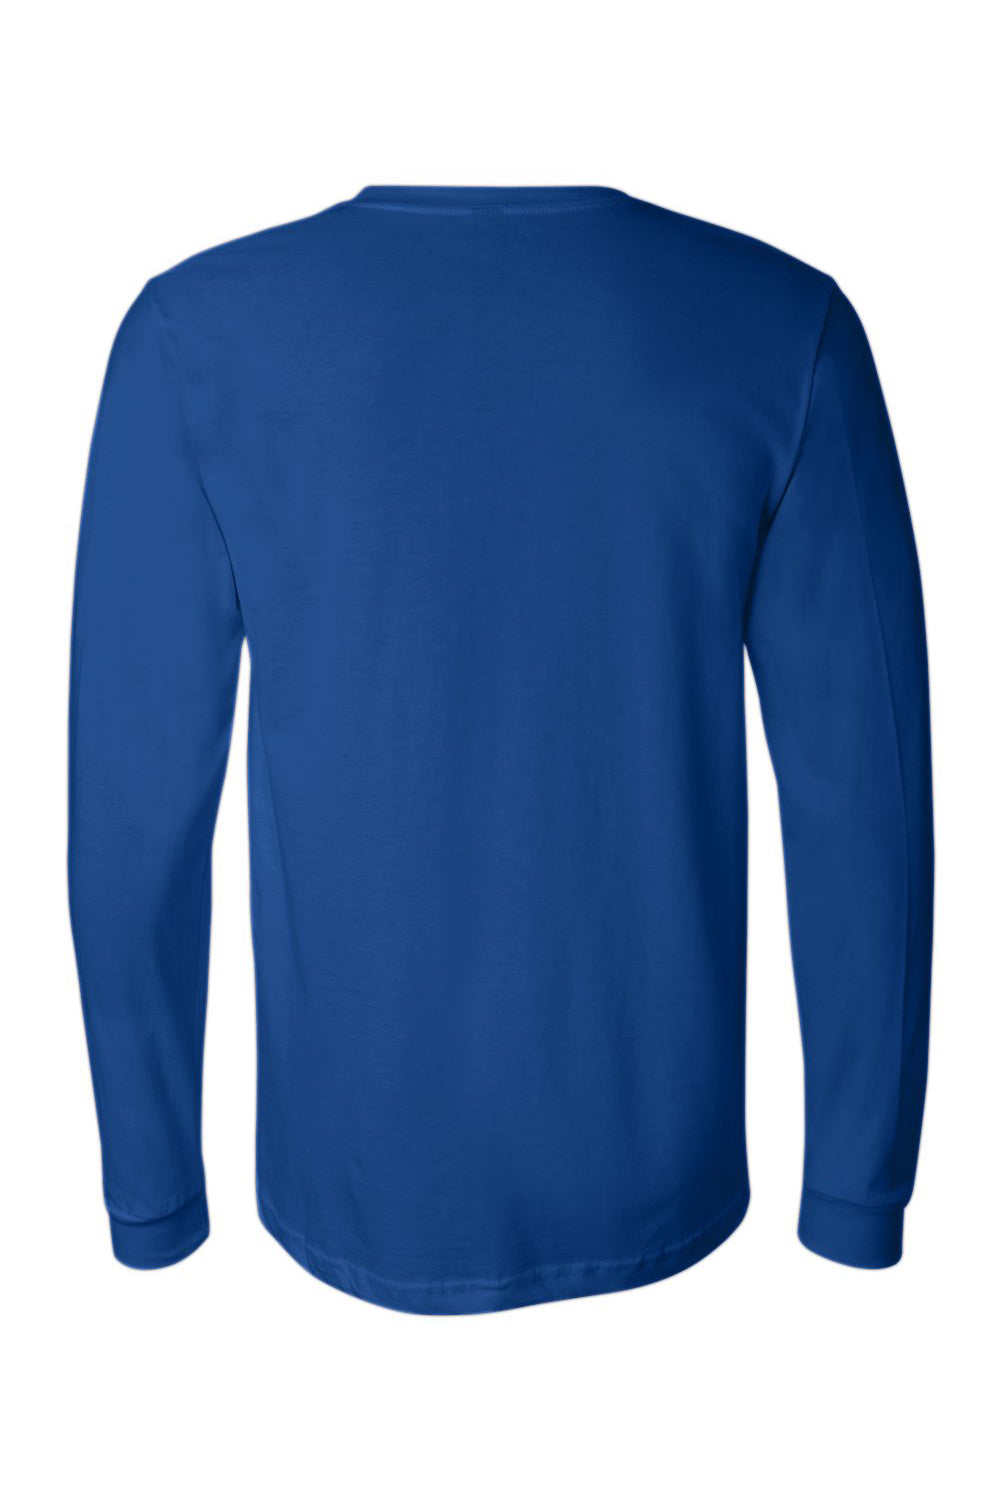 Bella + Canvas BC3501/3501 Mens Jersey Long Sleeve Crewneck T-Shirt True Royal Blue Triblend Flat Back